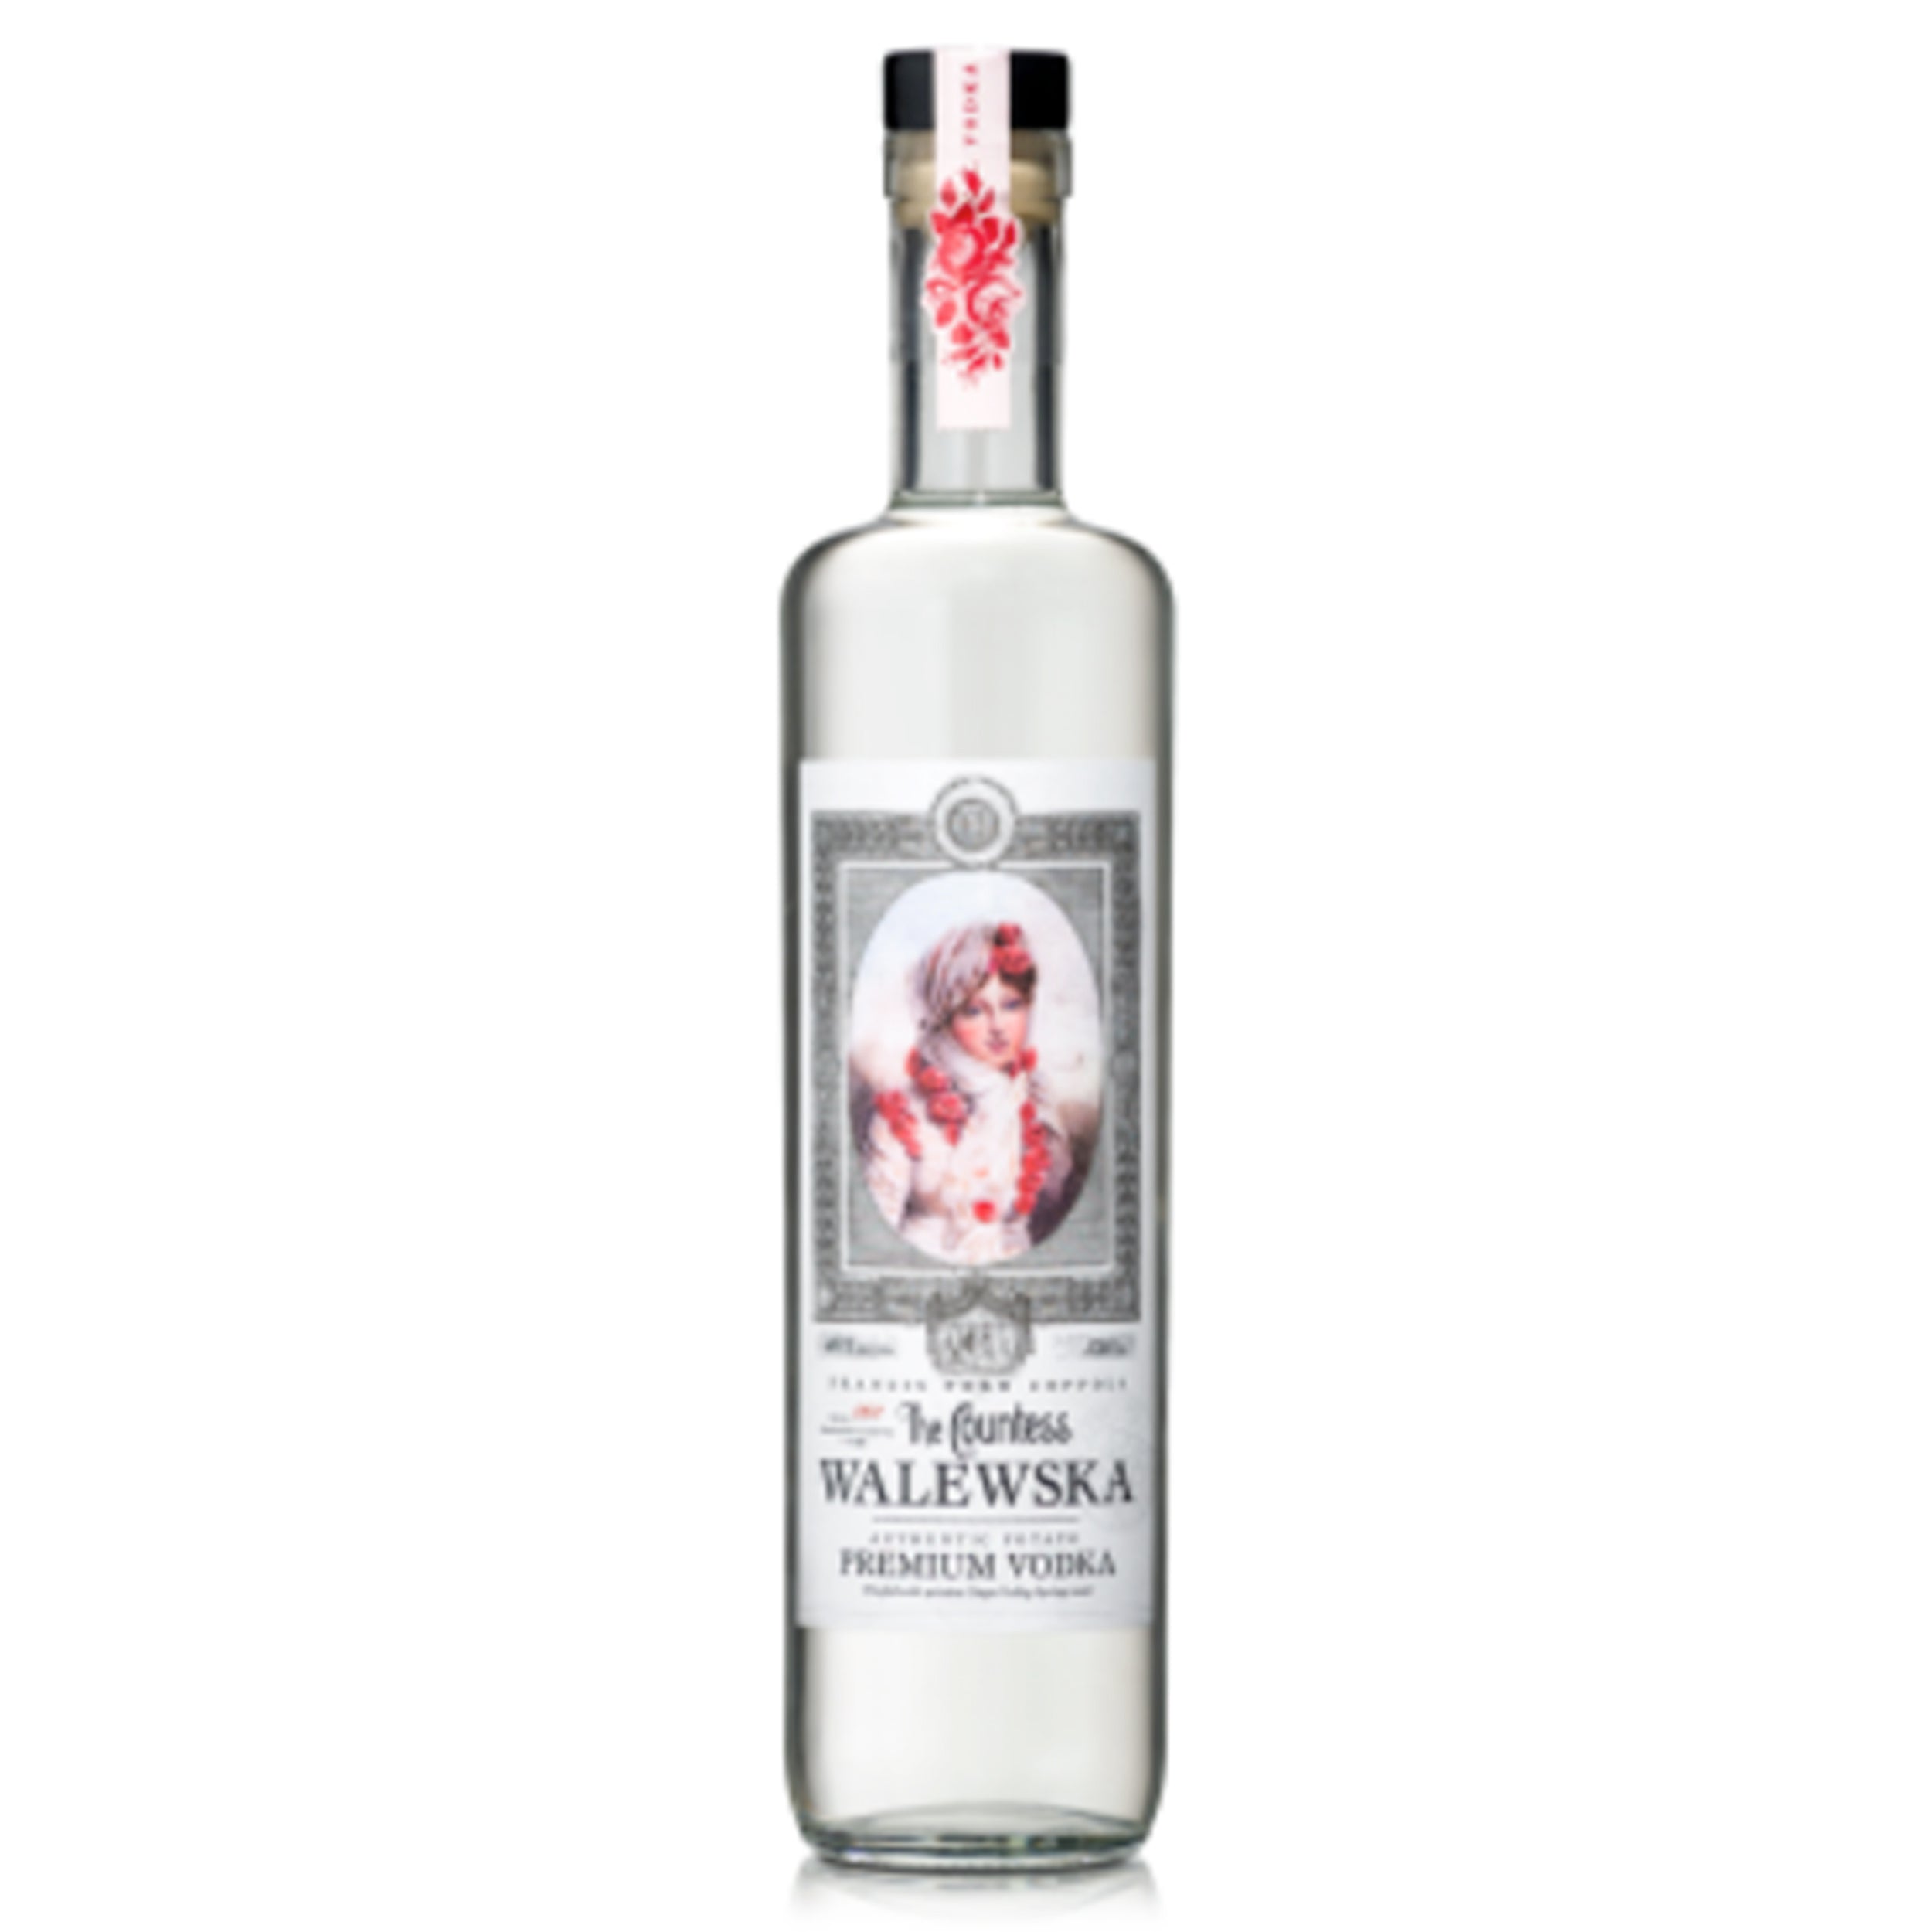 The Countless Walewska Vodka